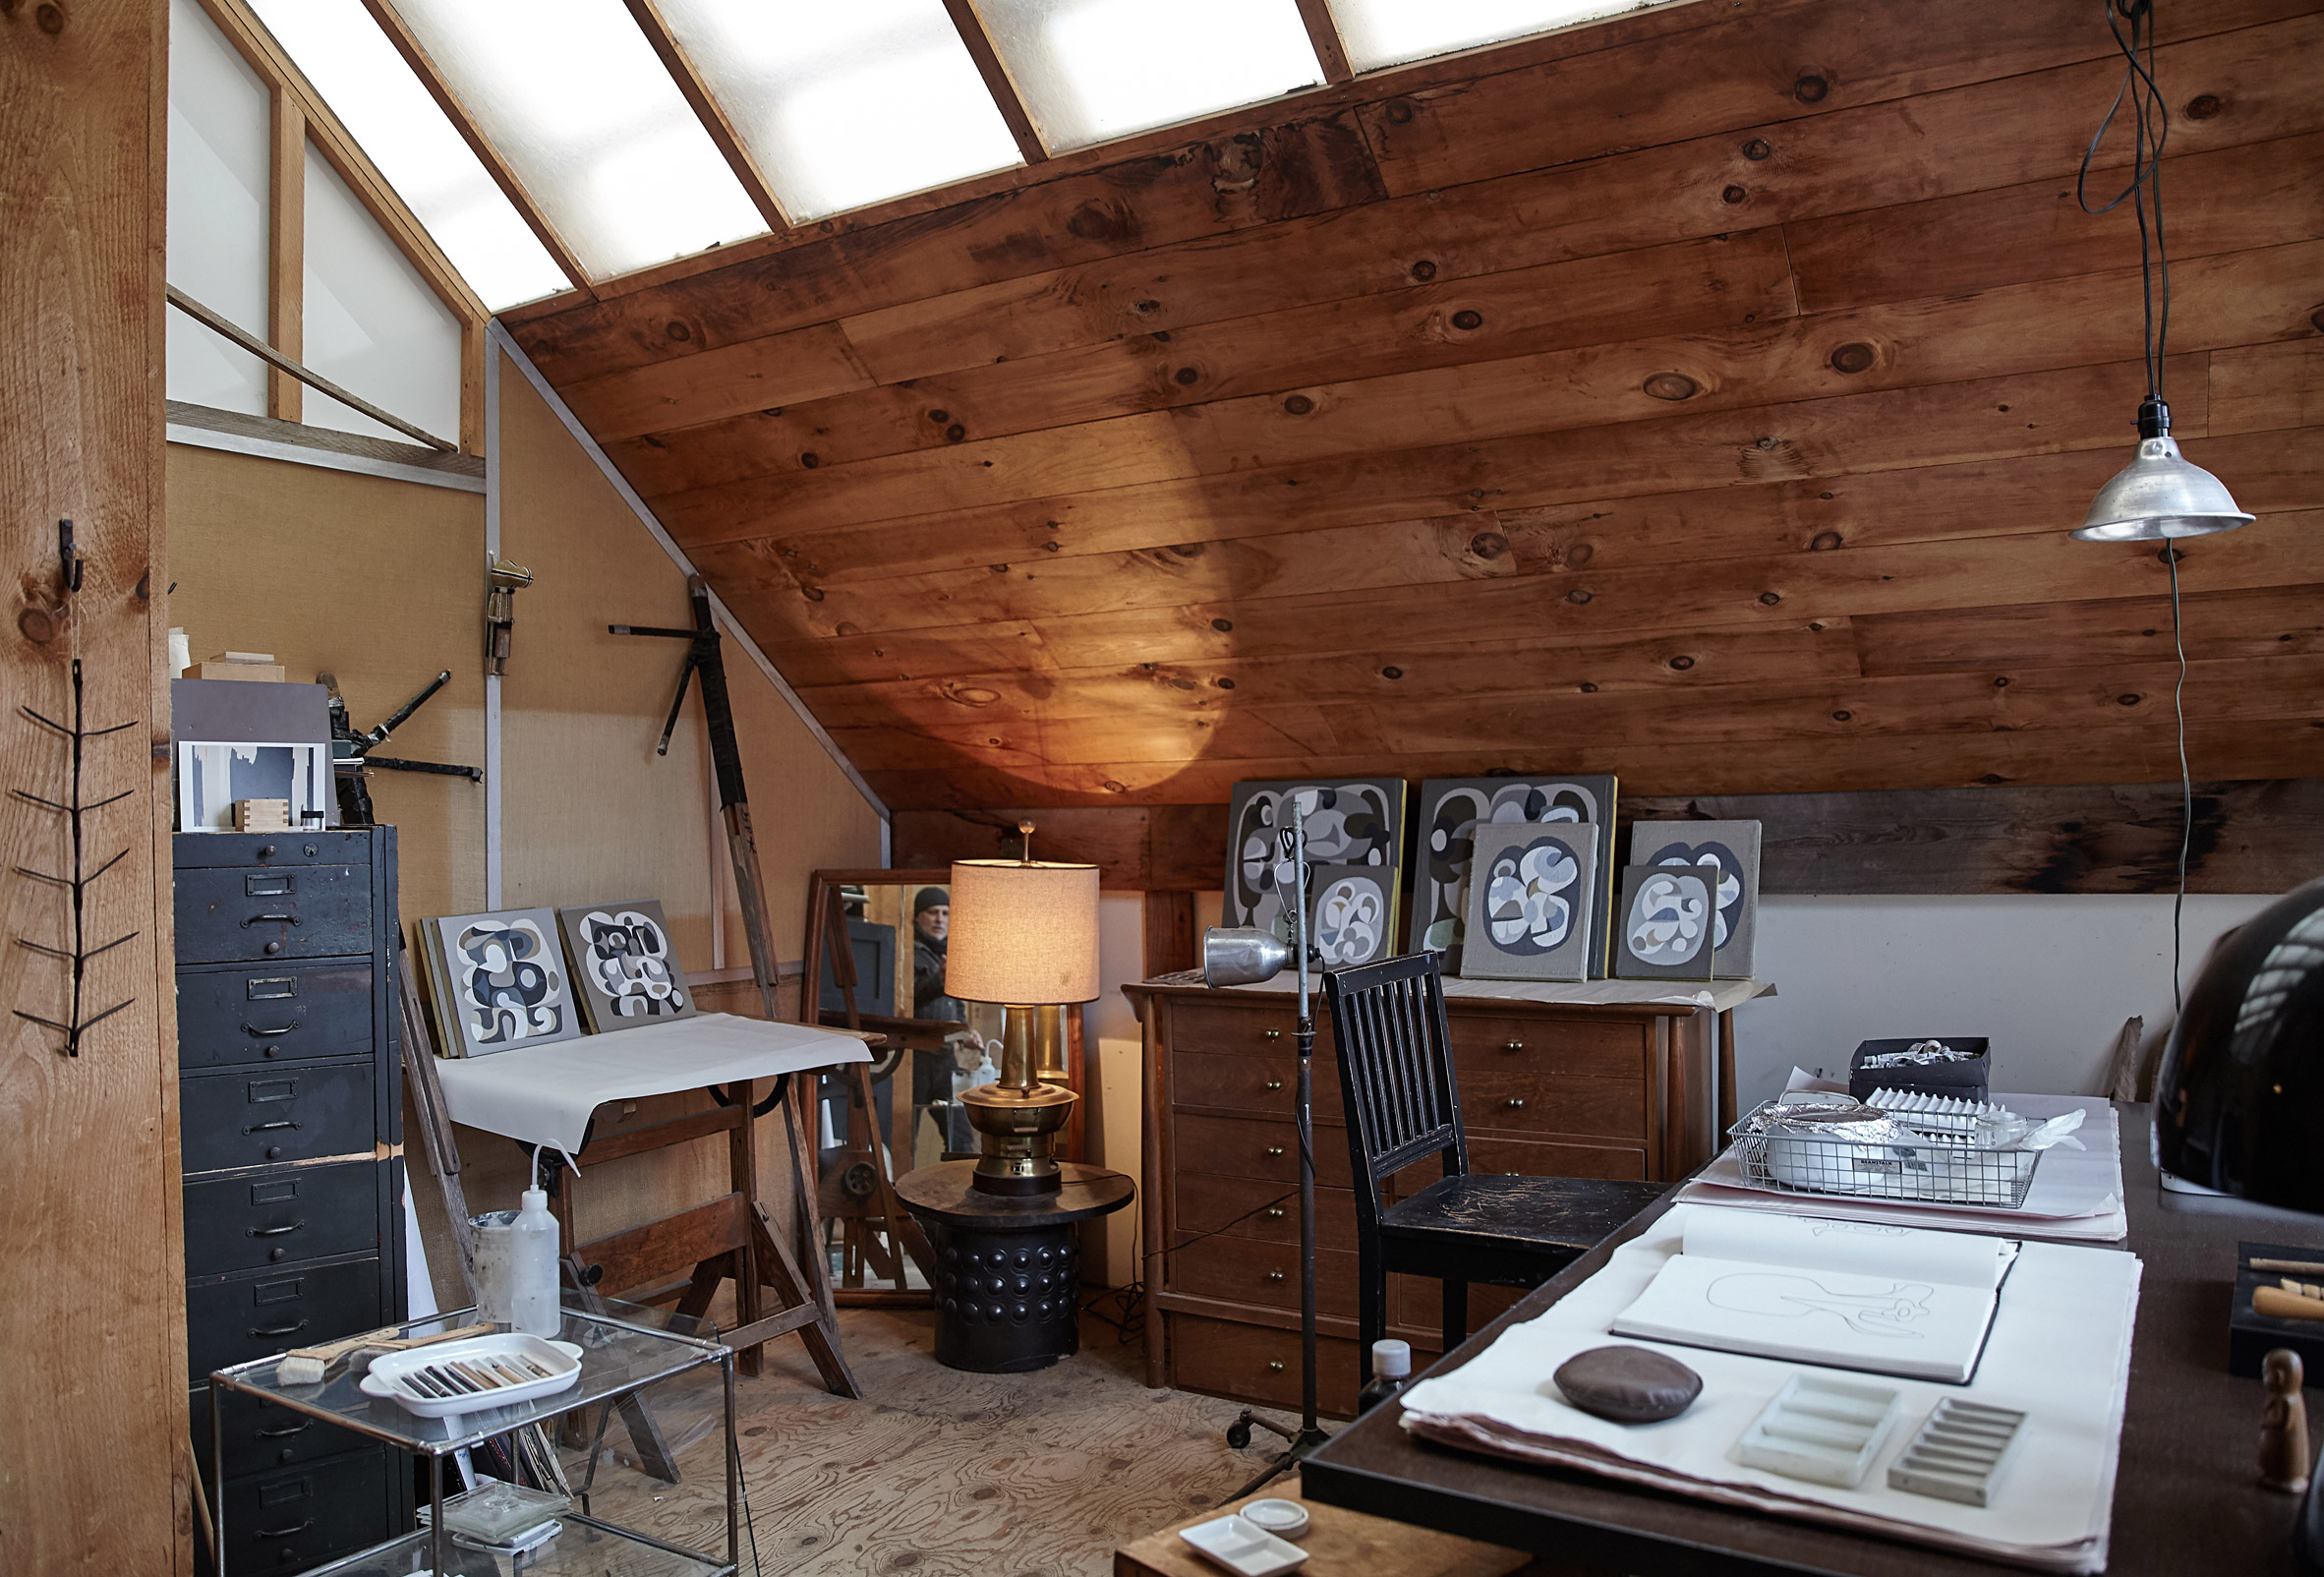 John-Paul Philippe'sConnecticut home and studio